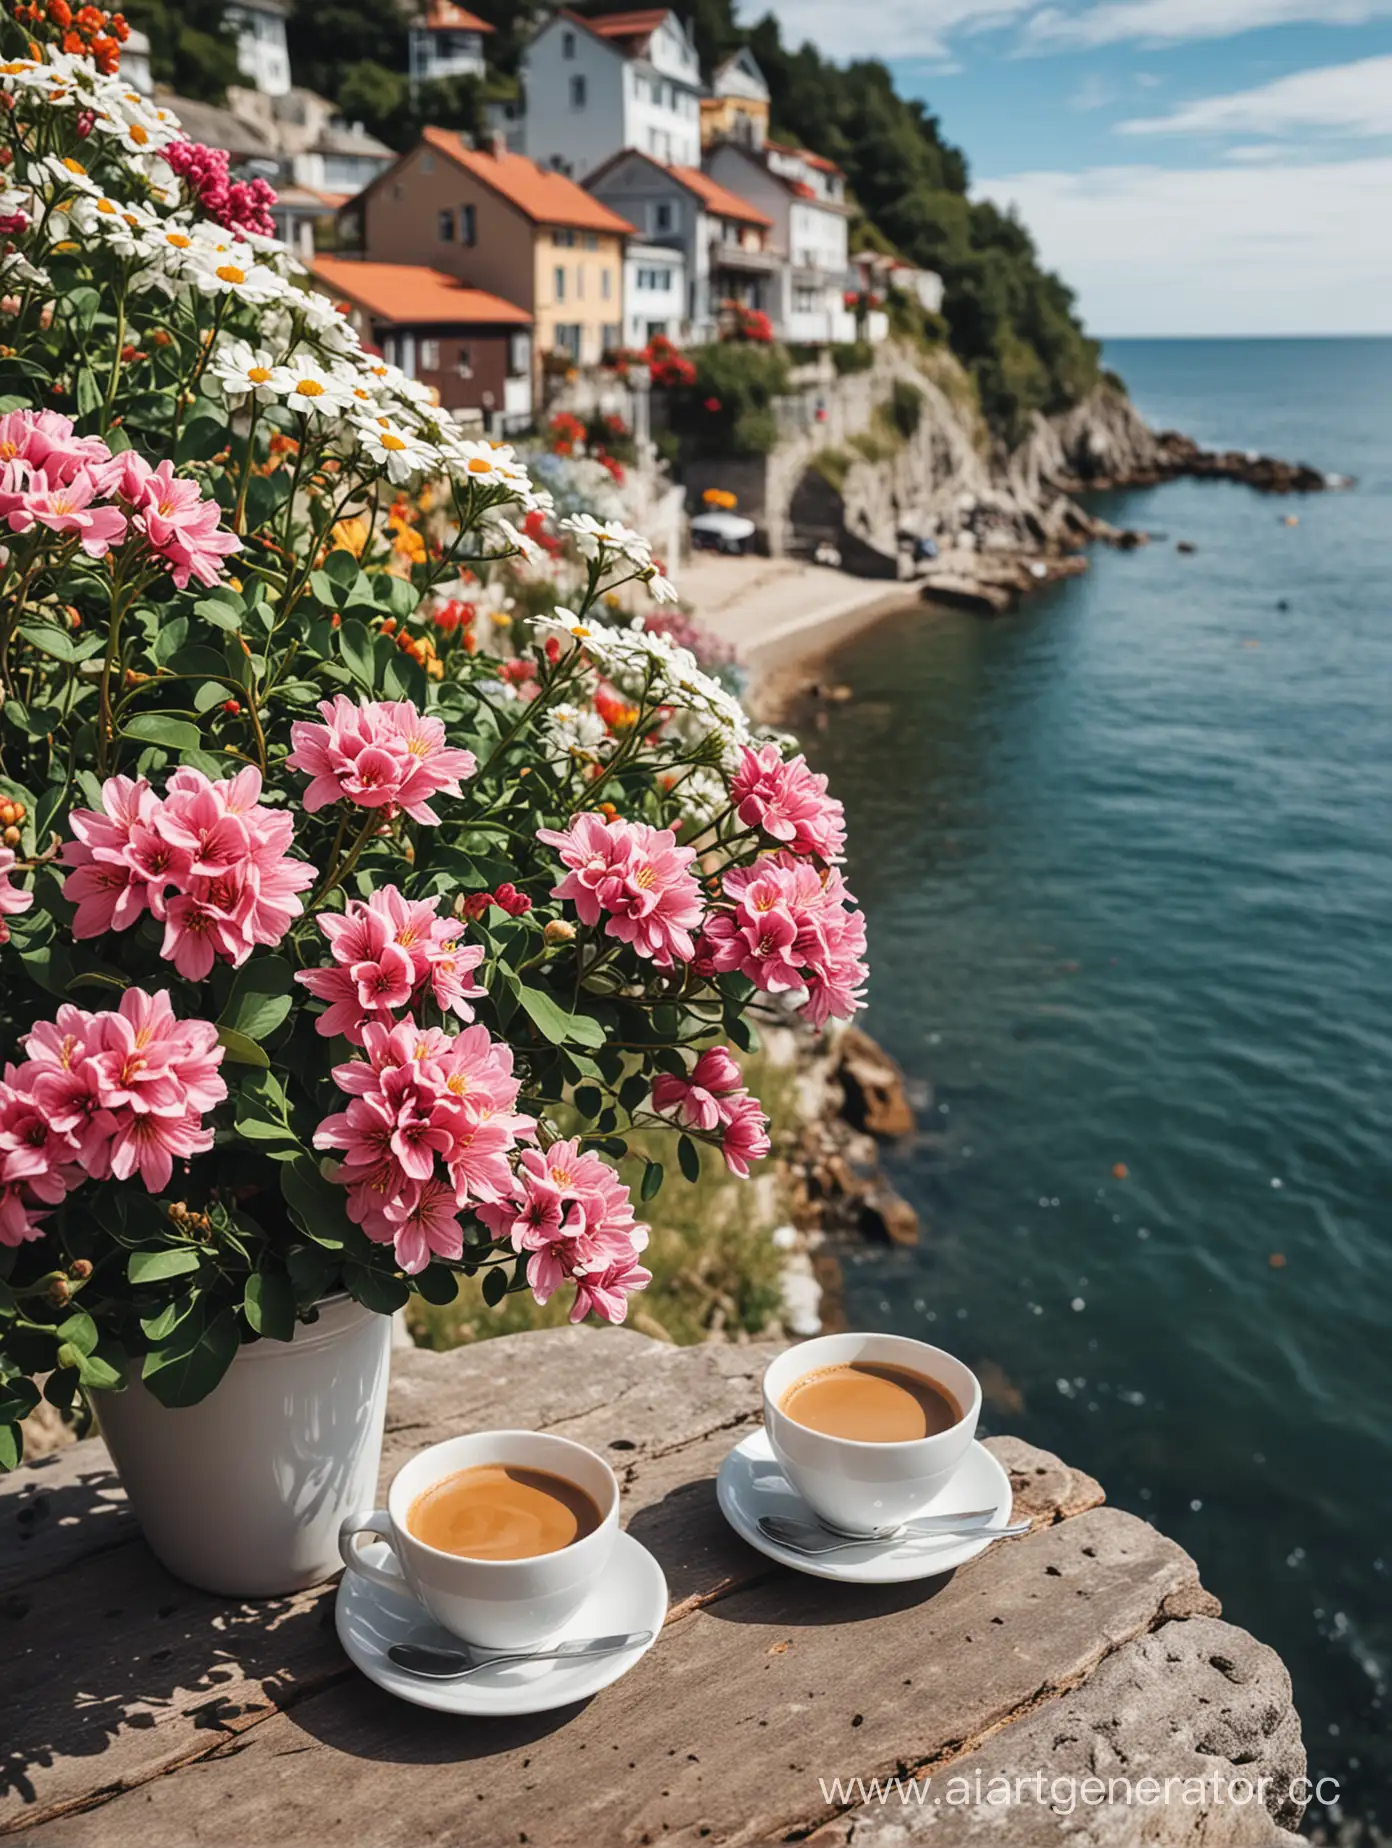 Cozy-Coffee-Break-by-the-Seaside-Enjoying-Refreshments-in-a-Charming-Coastal-Town